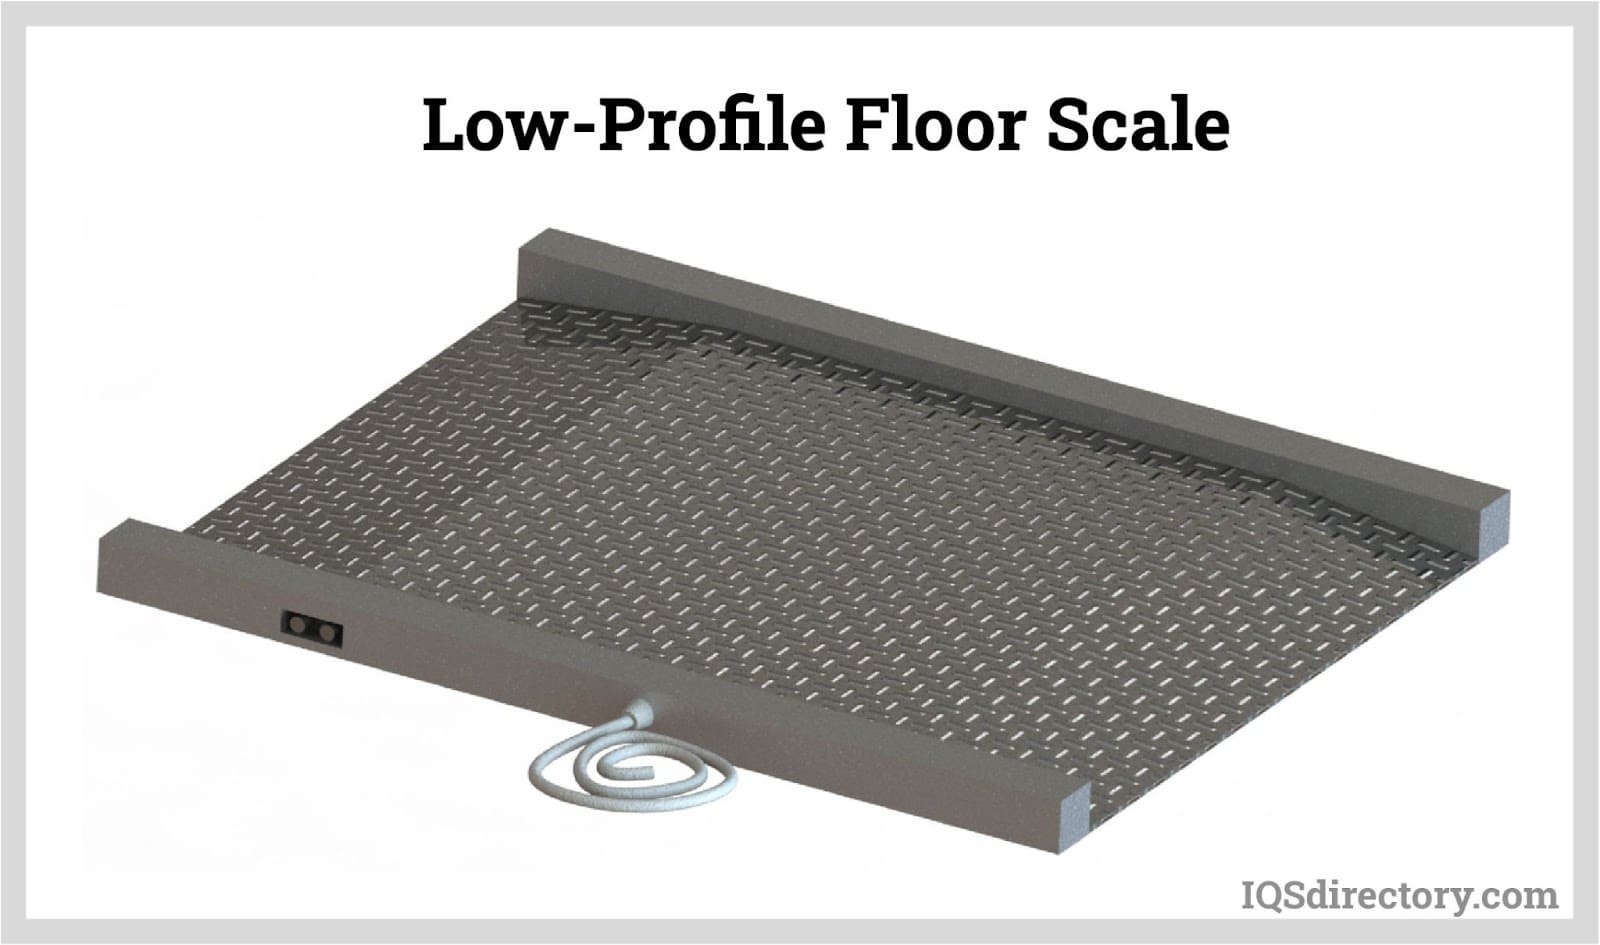 Low-Profile Floor Scale